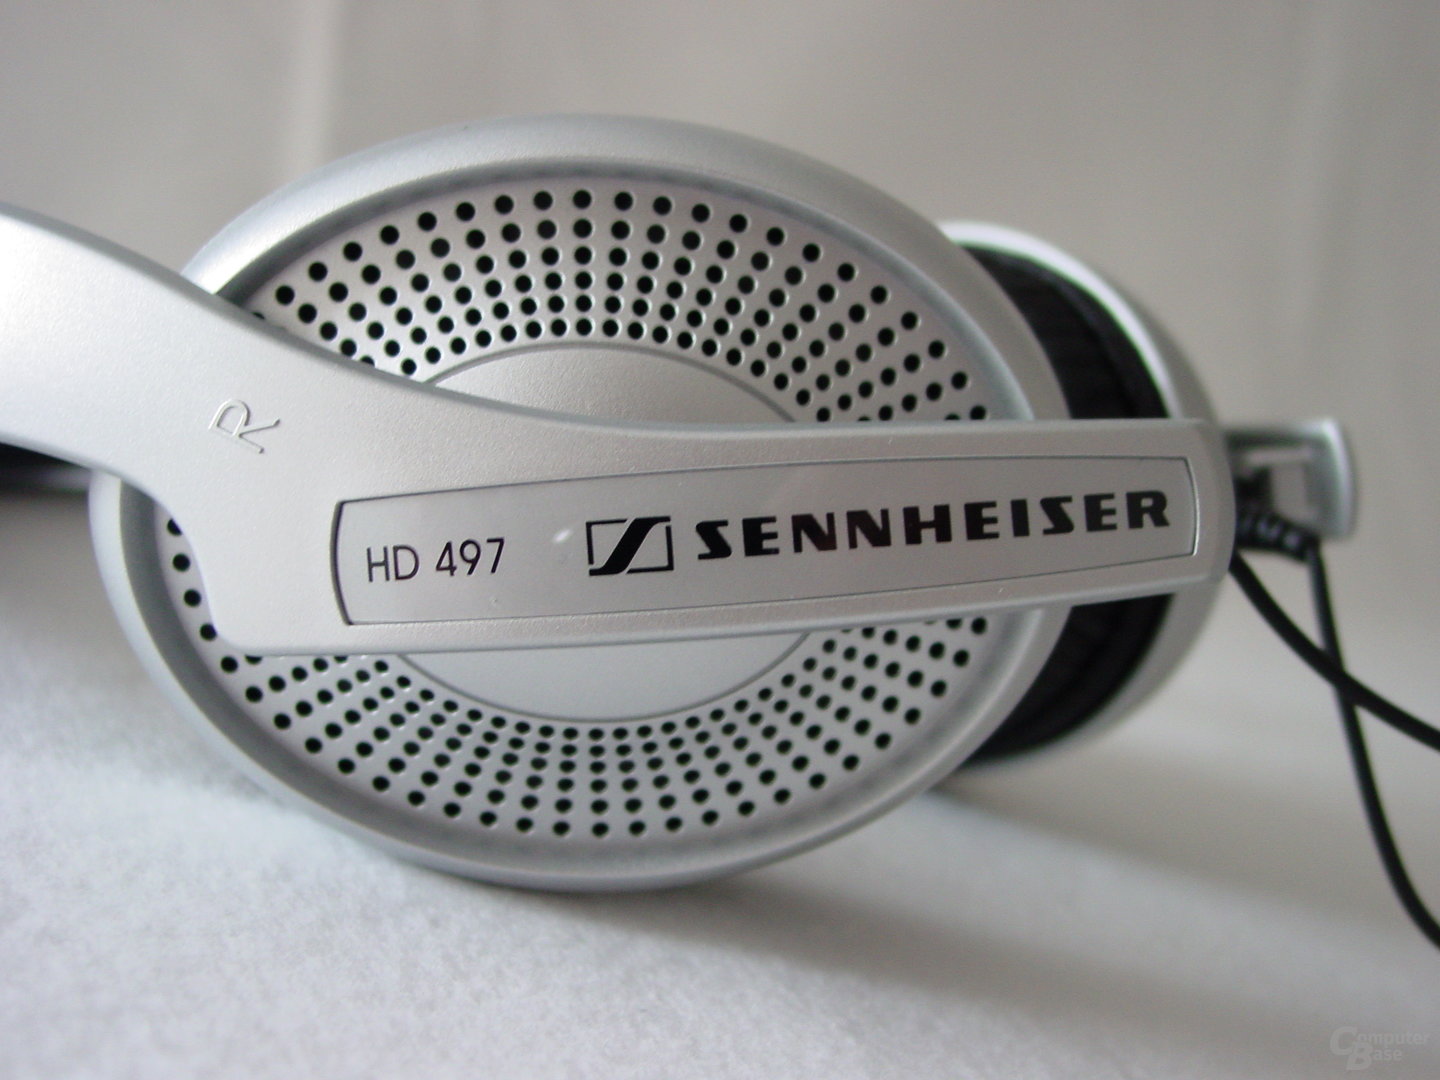 Sennheiser HD497